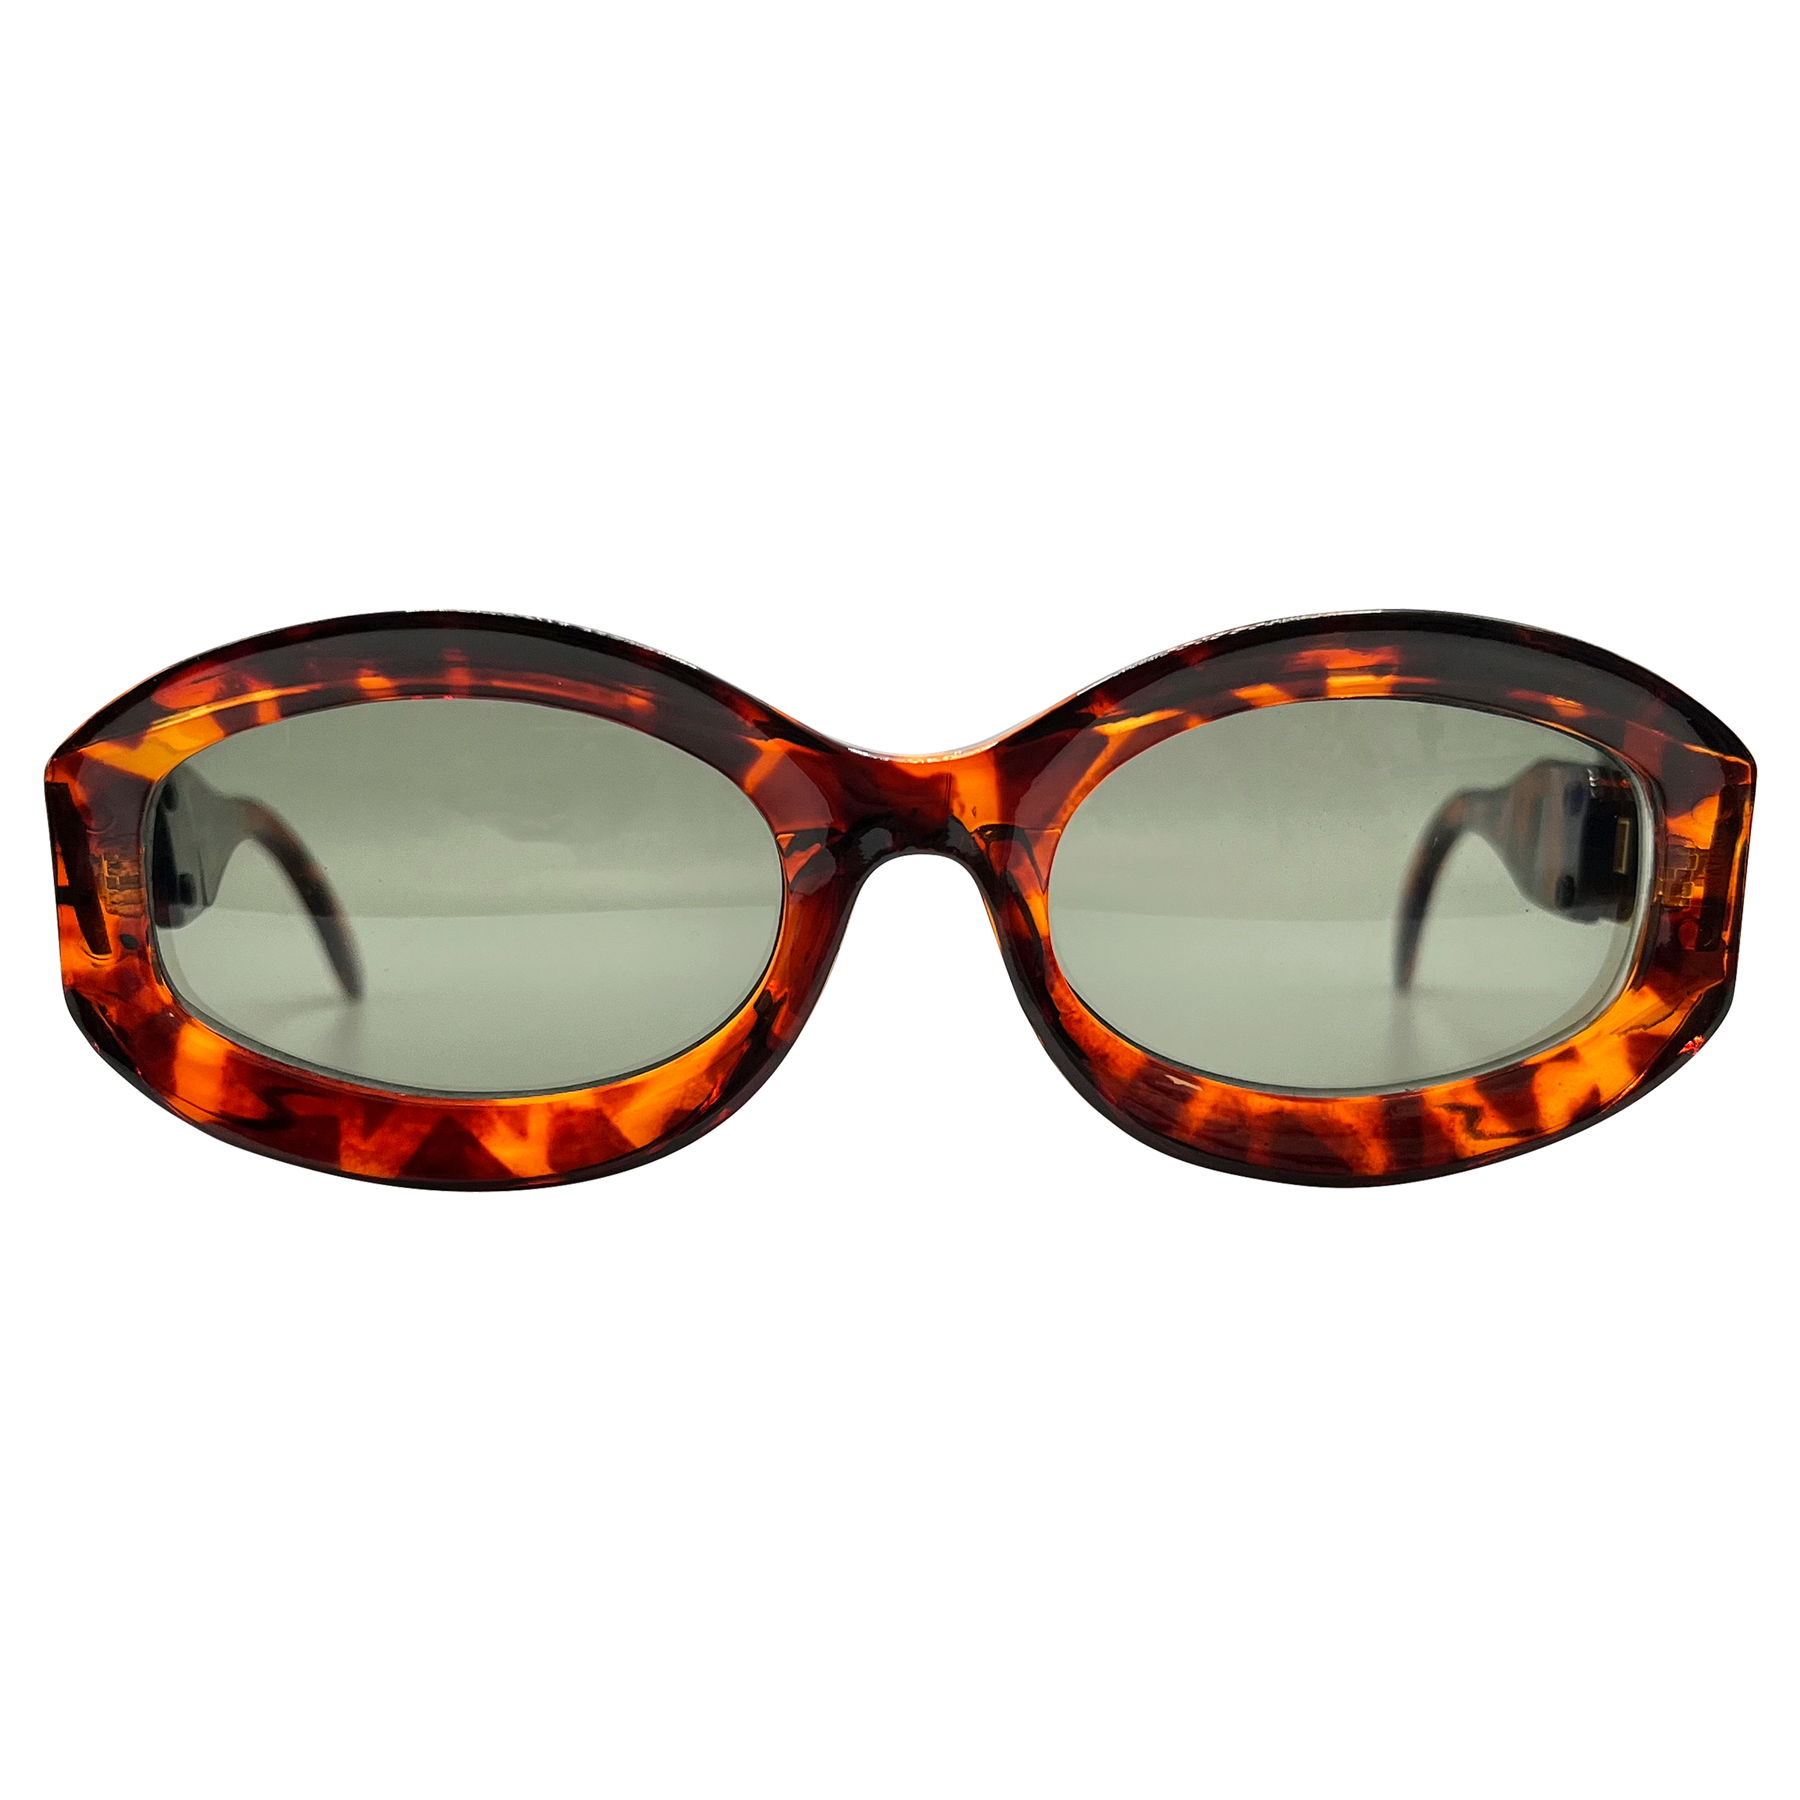 KIKA Tortoise/G12 Mod Square Sunglasses